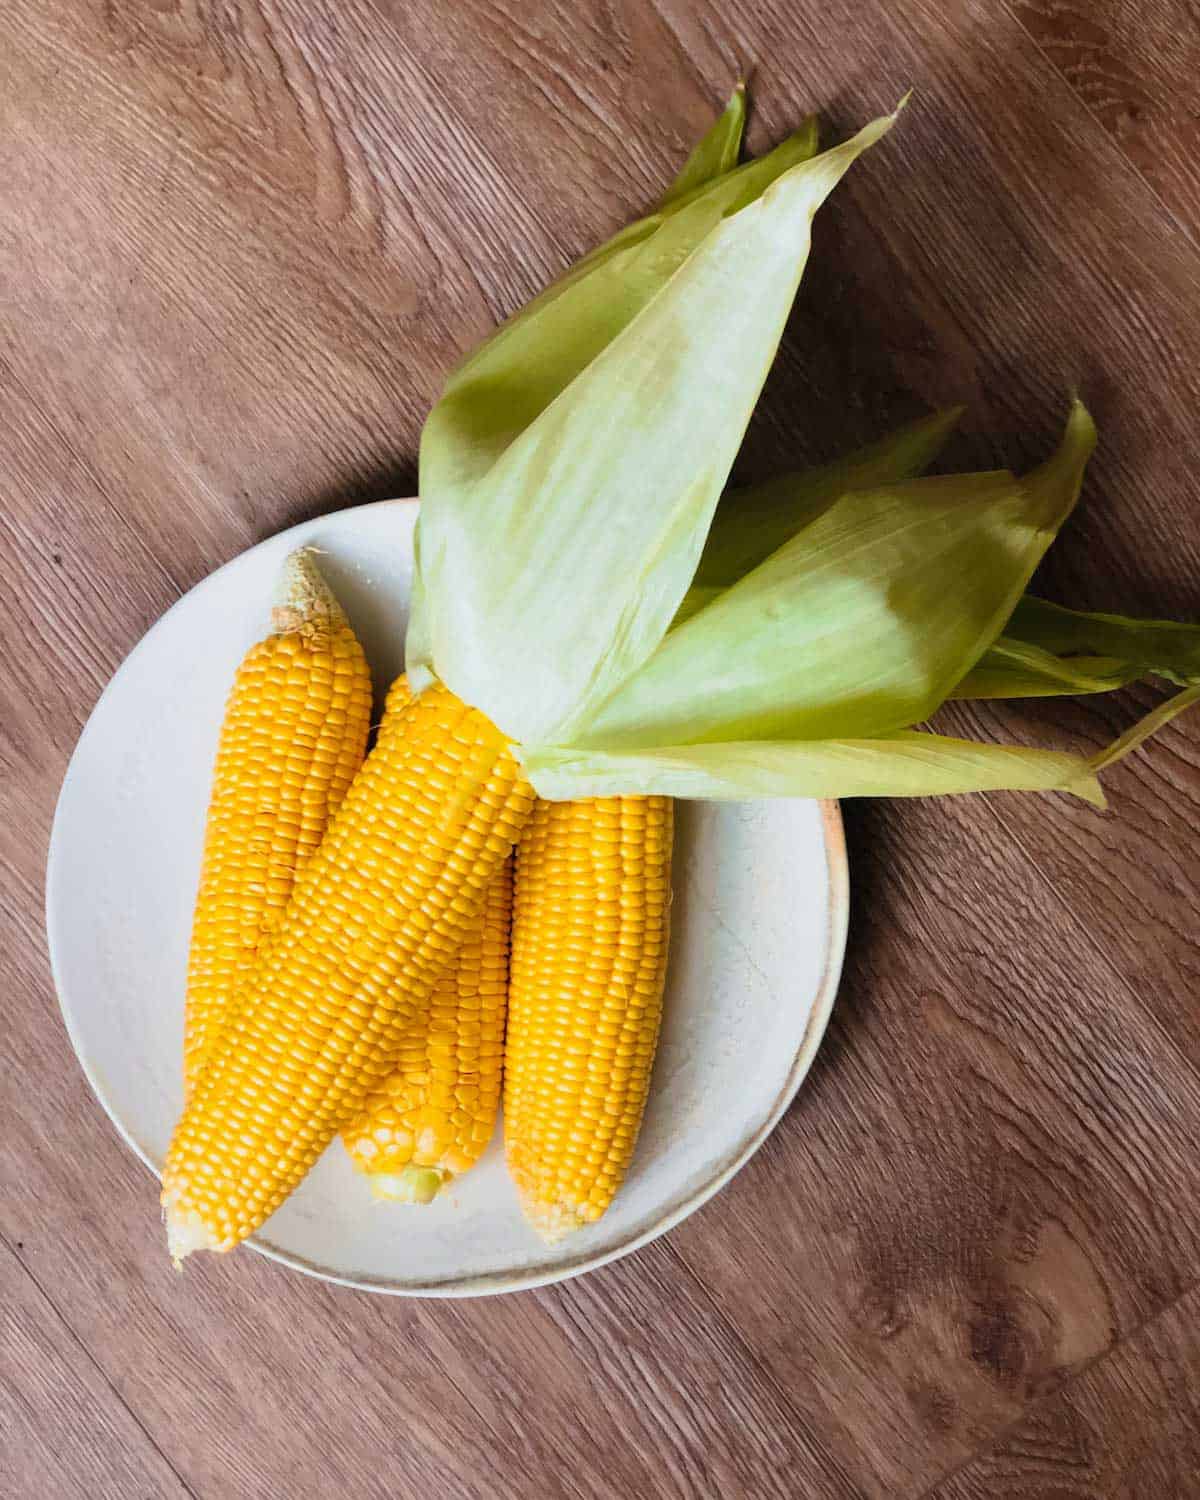 Corn on the cob half peeled on a white plate.